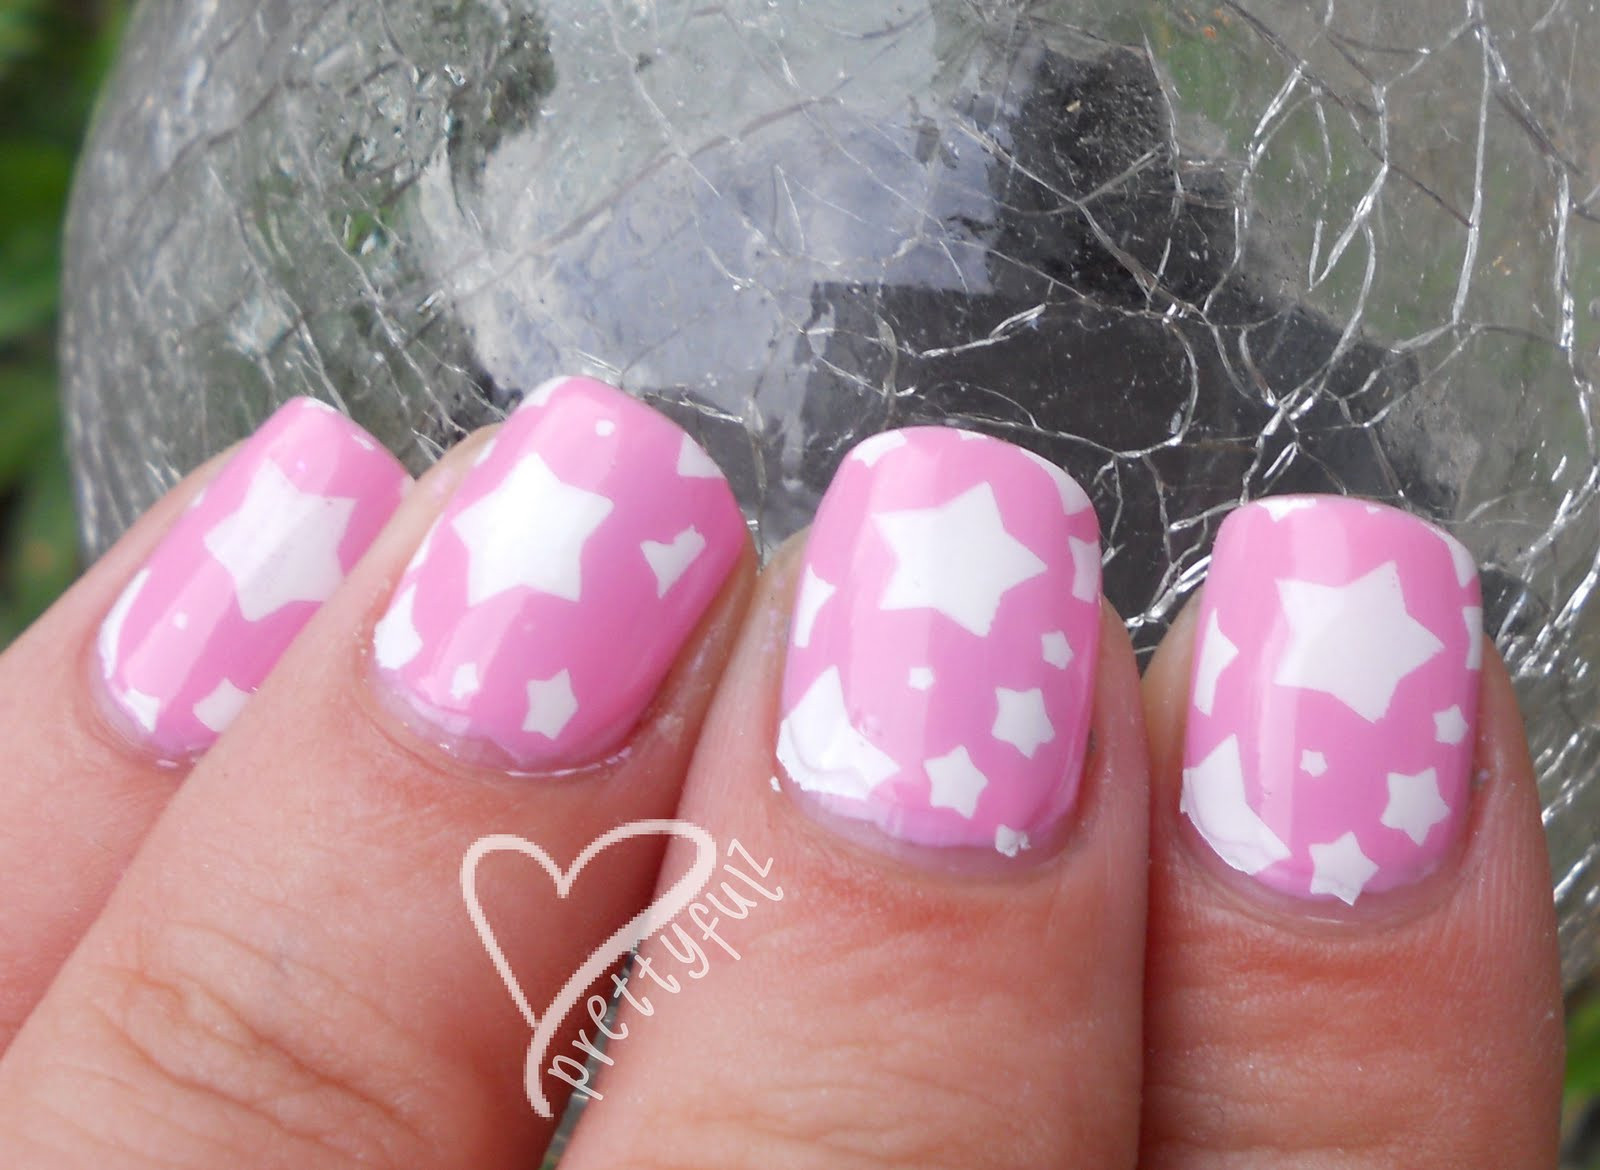 Cute Pink Nail Designs
 Prettyfulz Super Cute Pink & White Star Nail Art Design